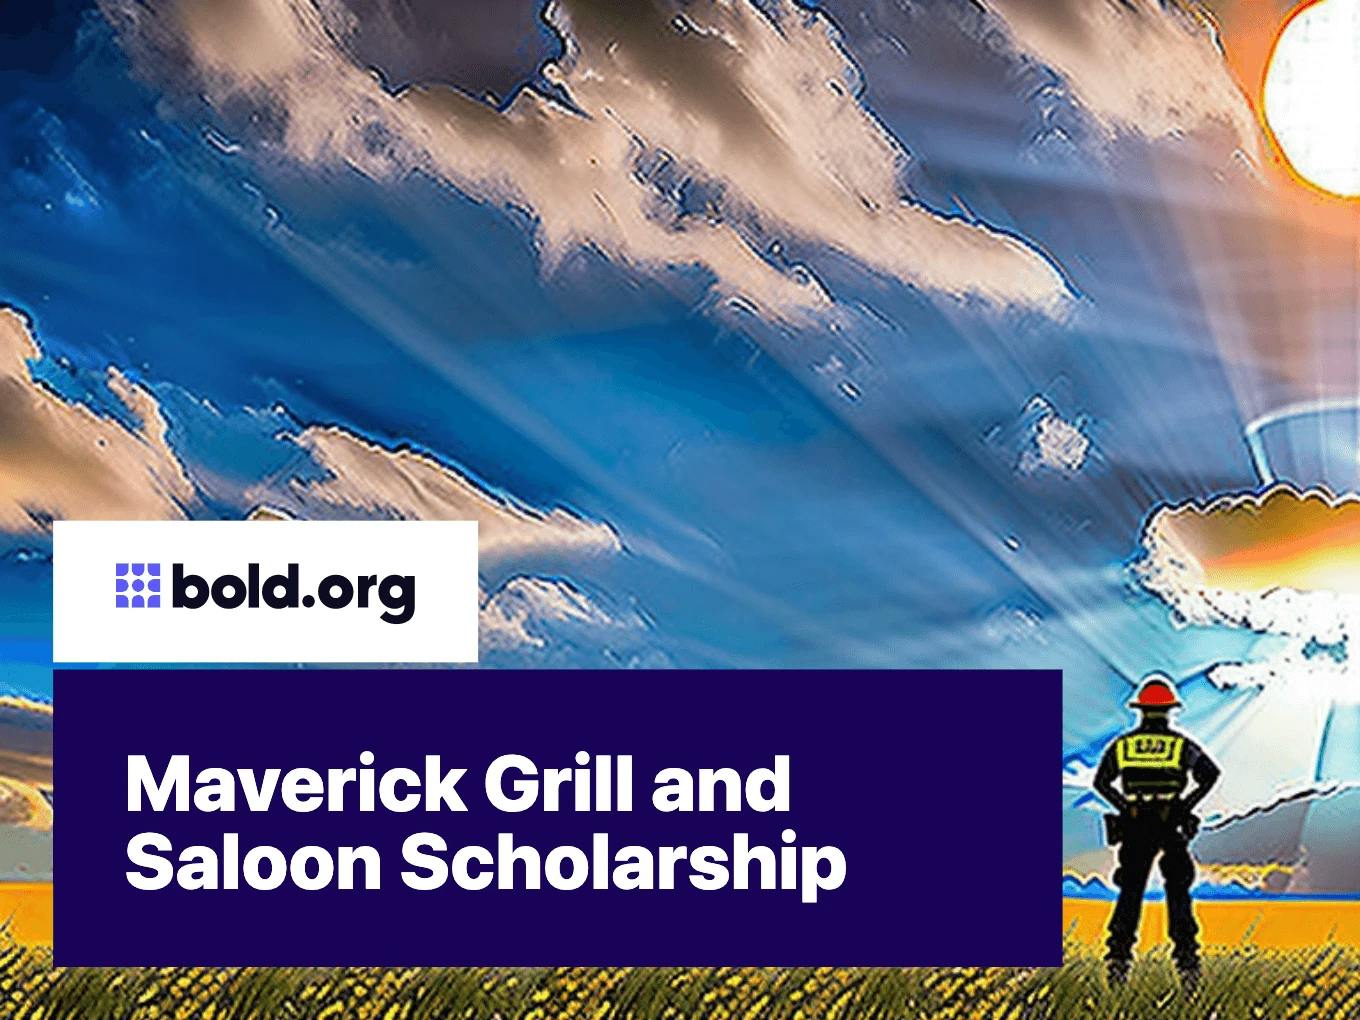 Maverick Grill and Saloon Scholarship